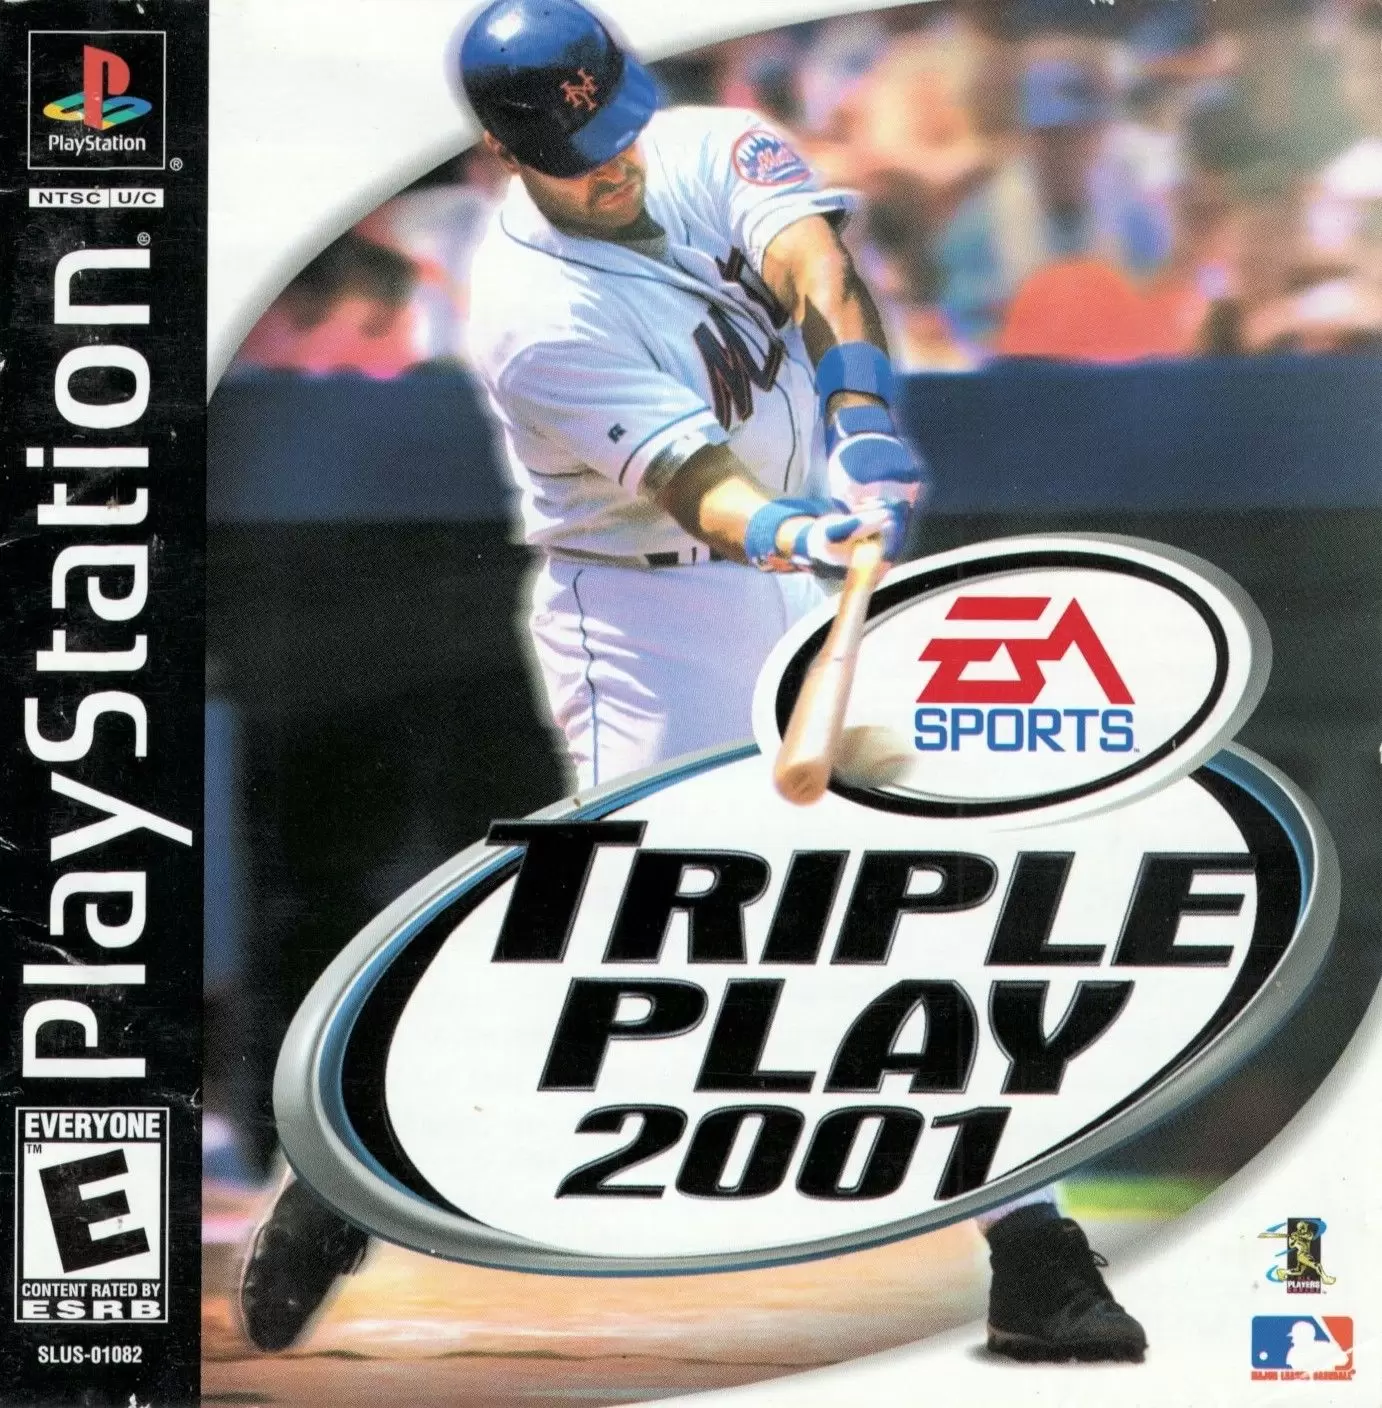 Playstation games - Triple Play 2001